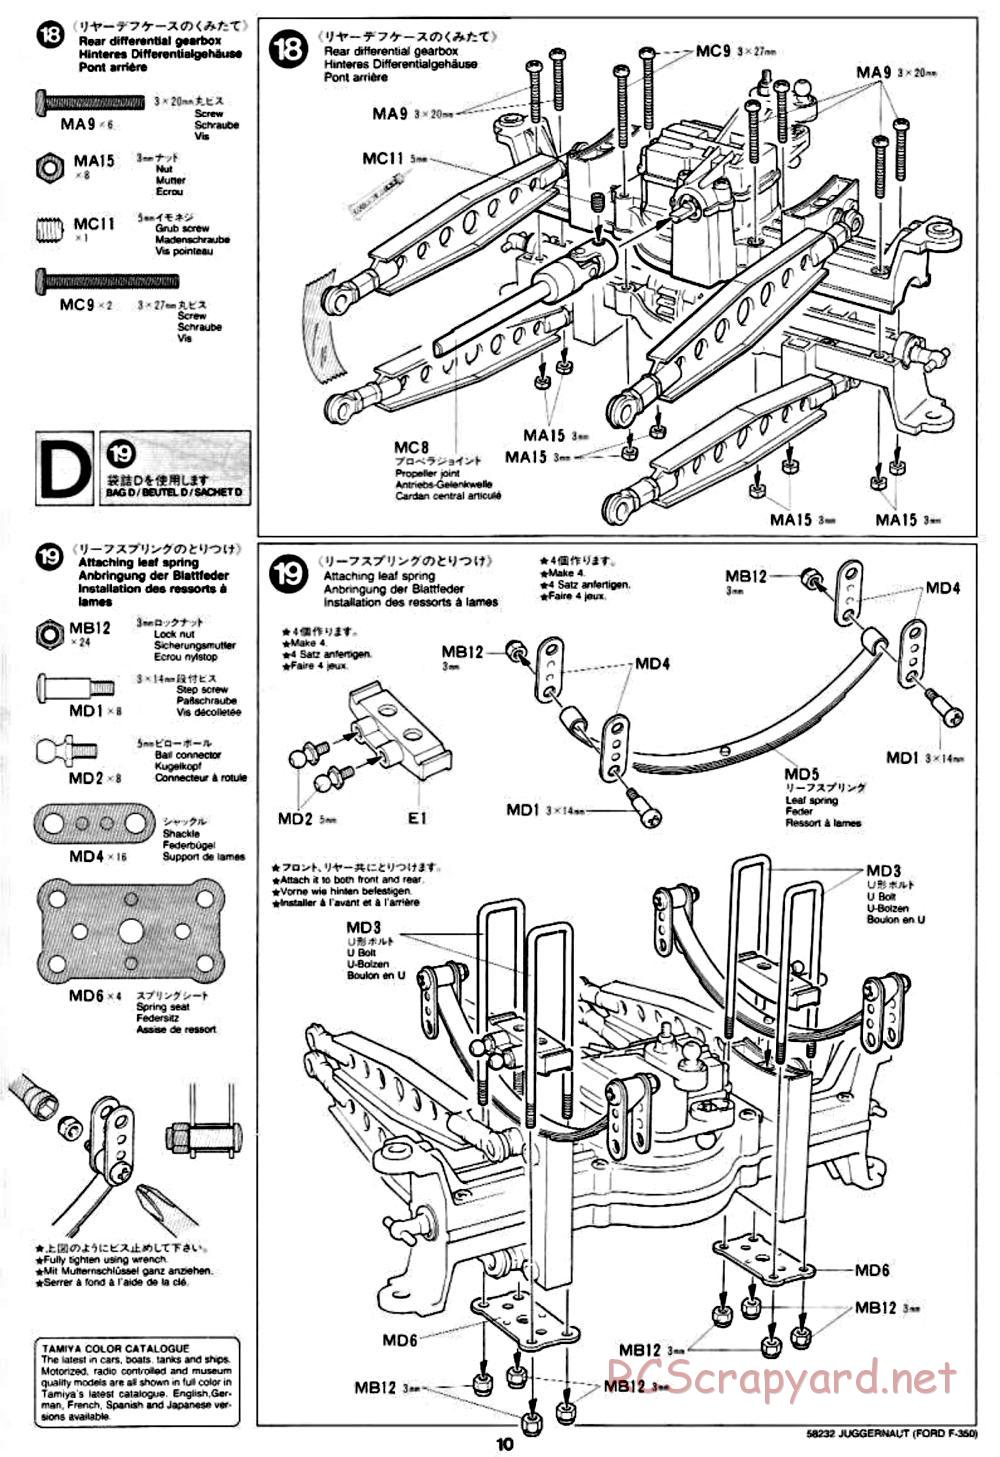 Tamiya - Juggernaut Chassis - Manual - Page 10